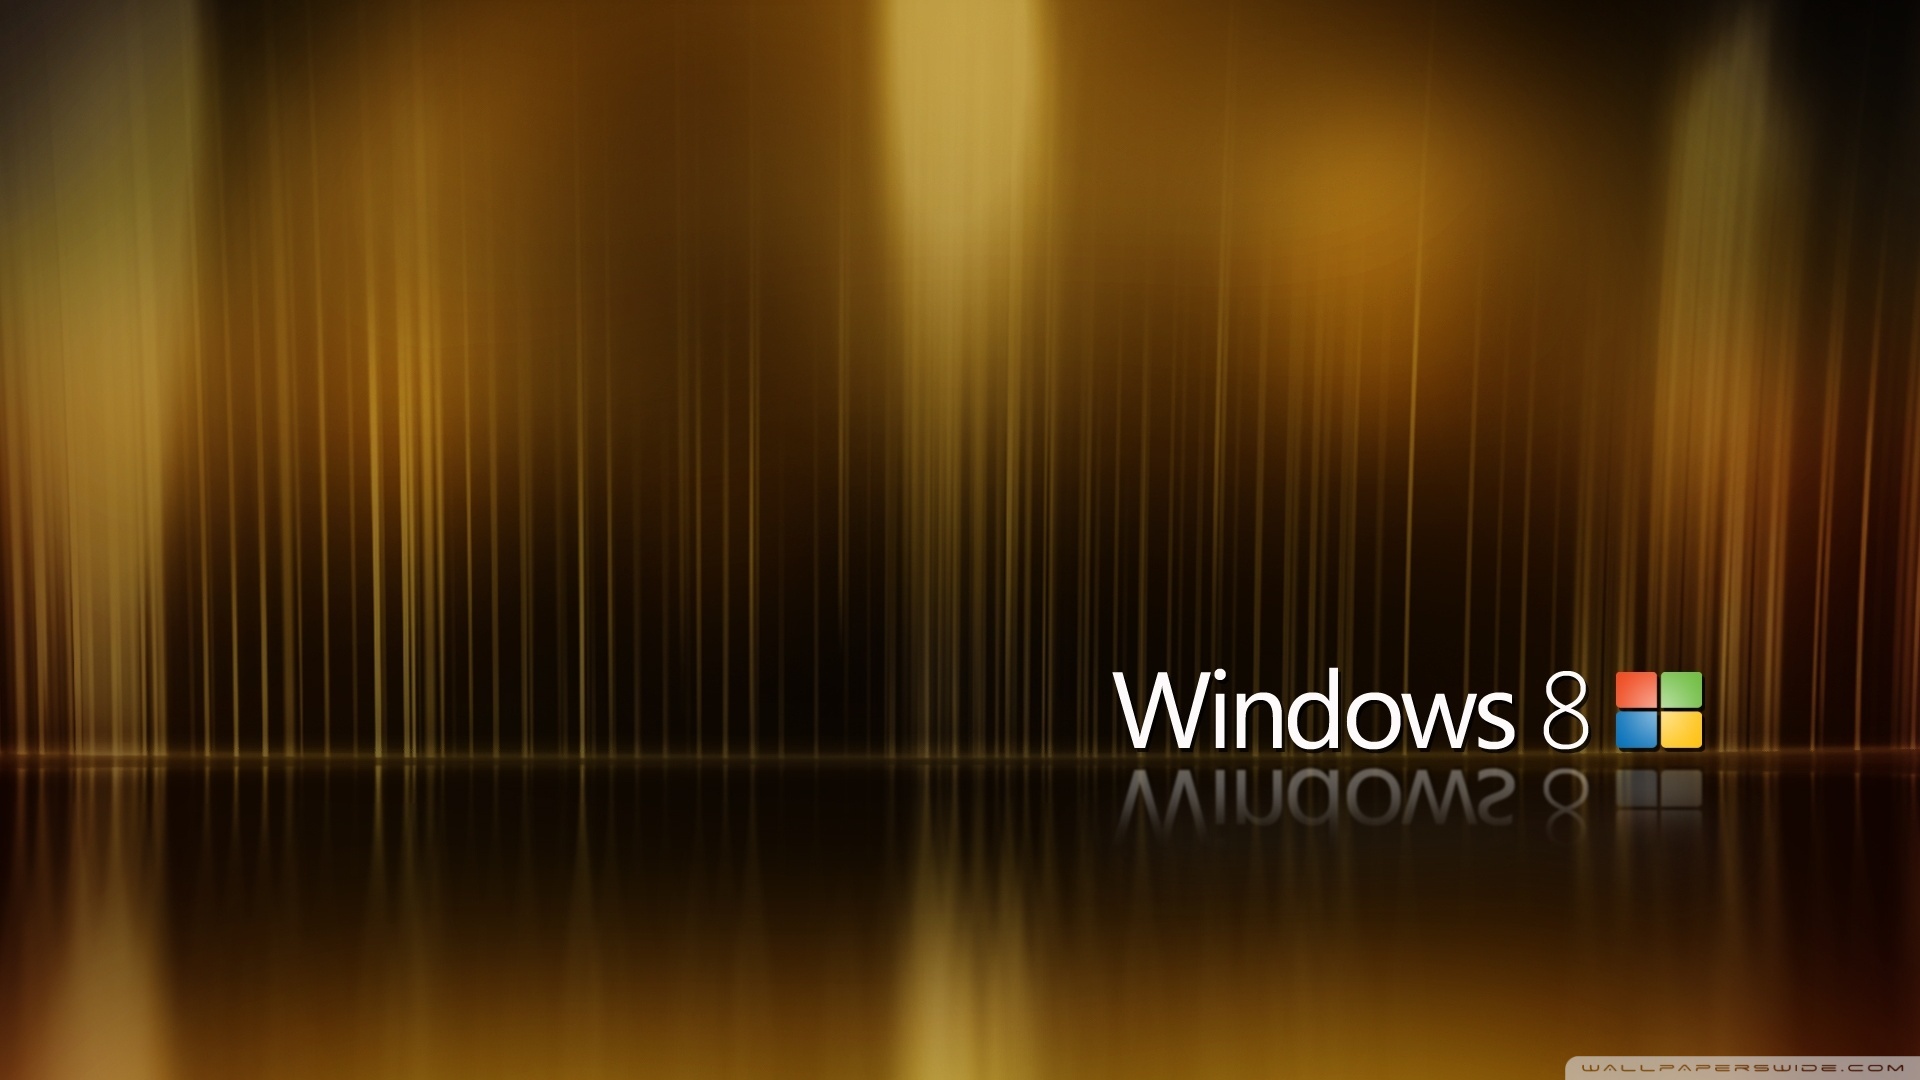 HD Windows 8 Wallpapers